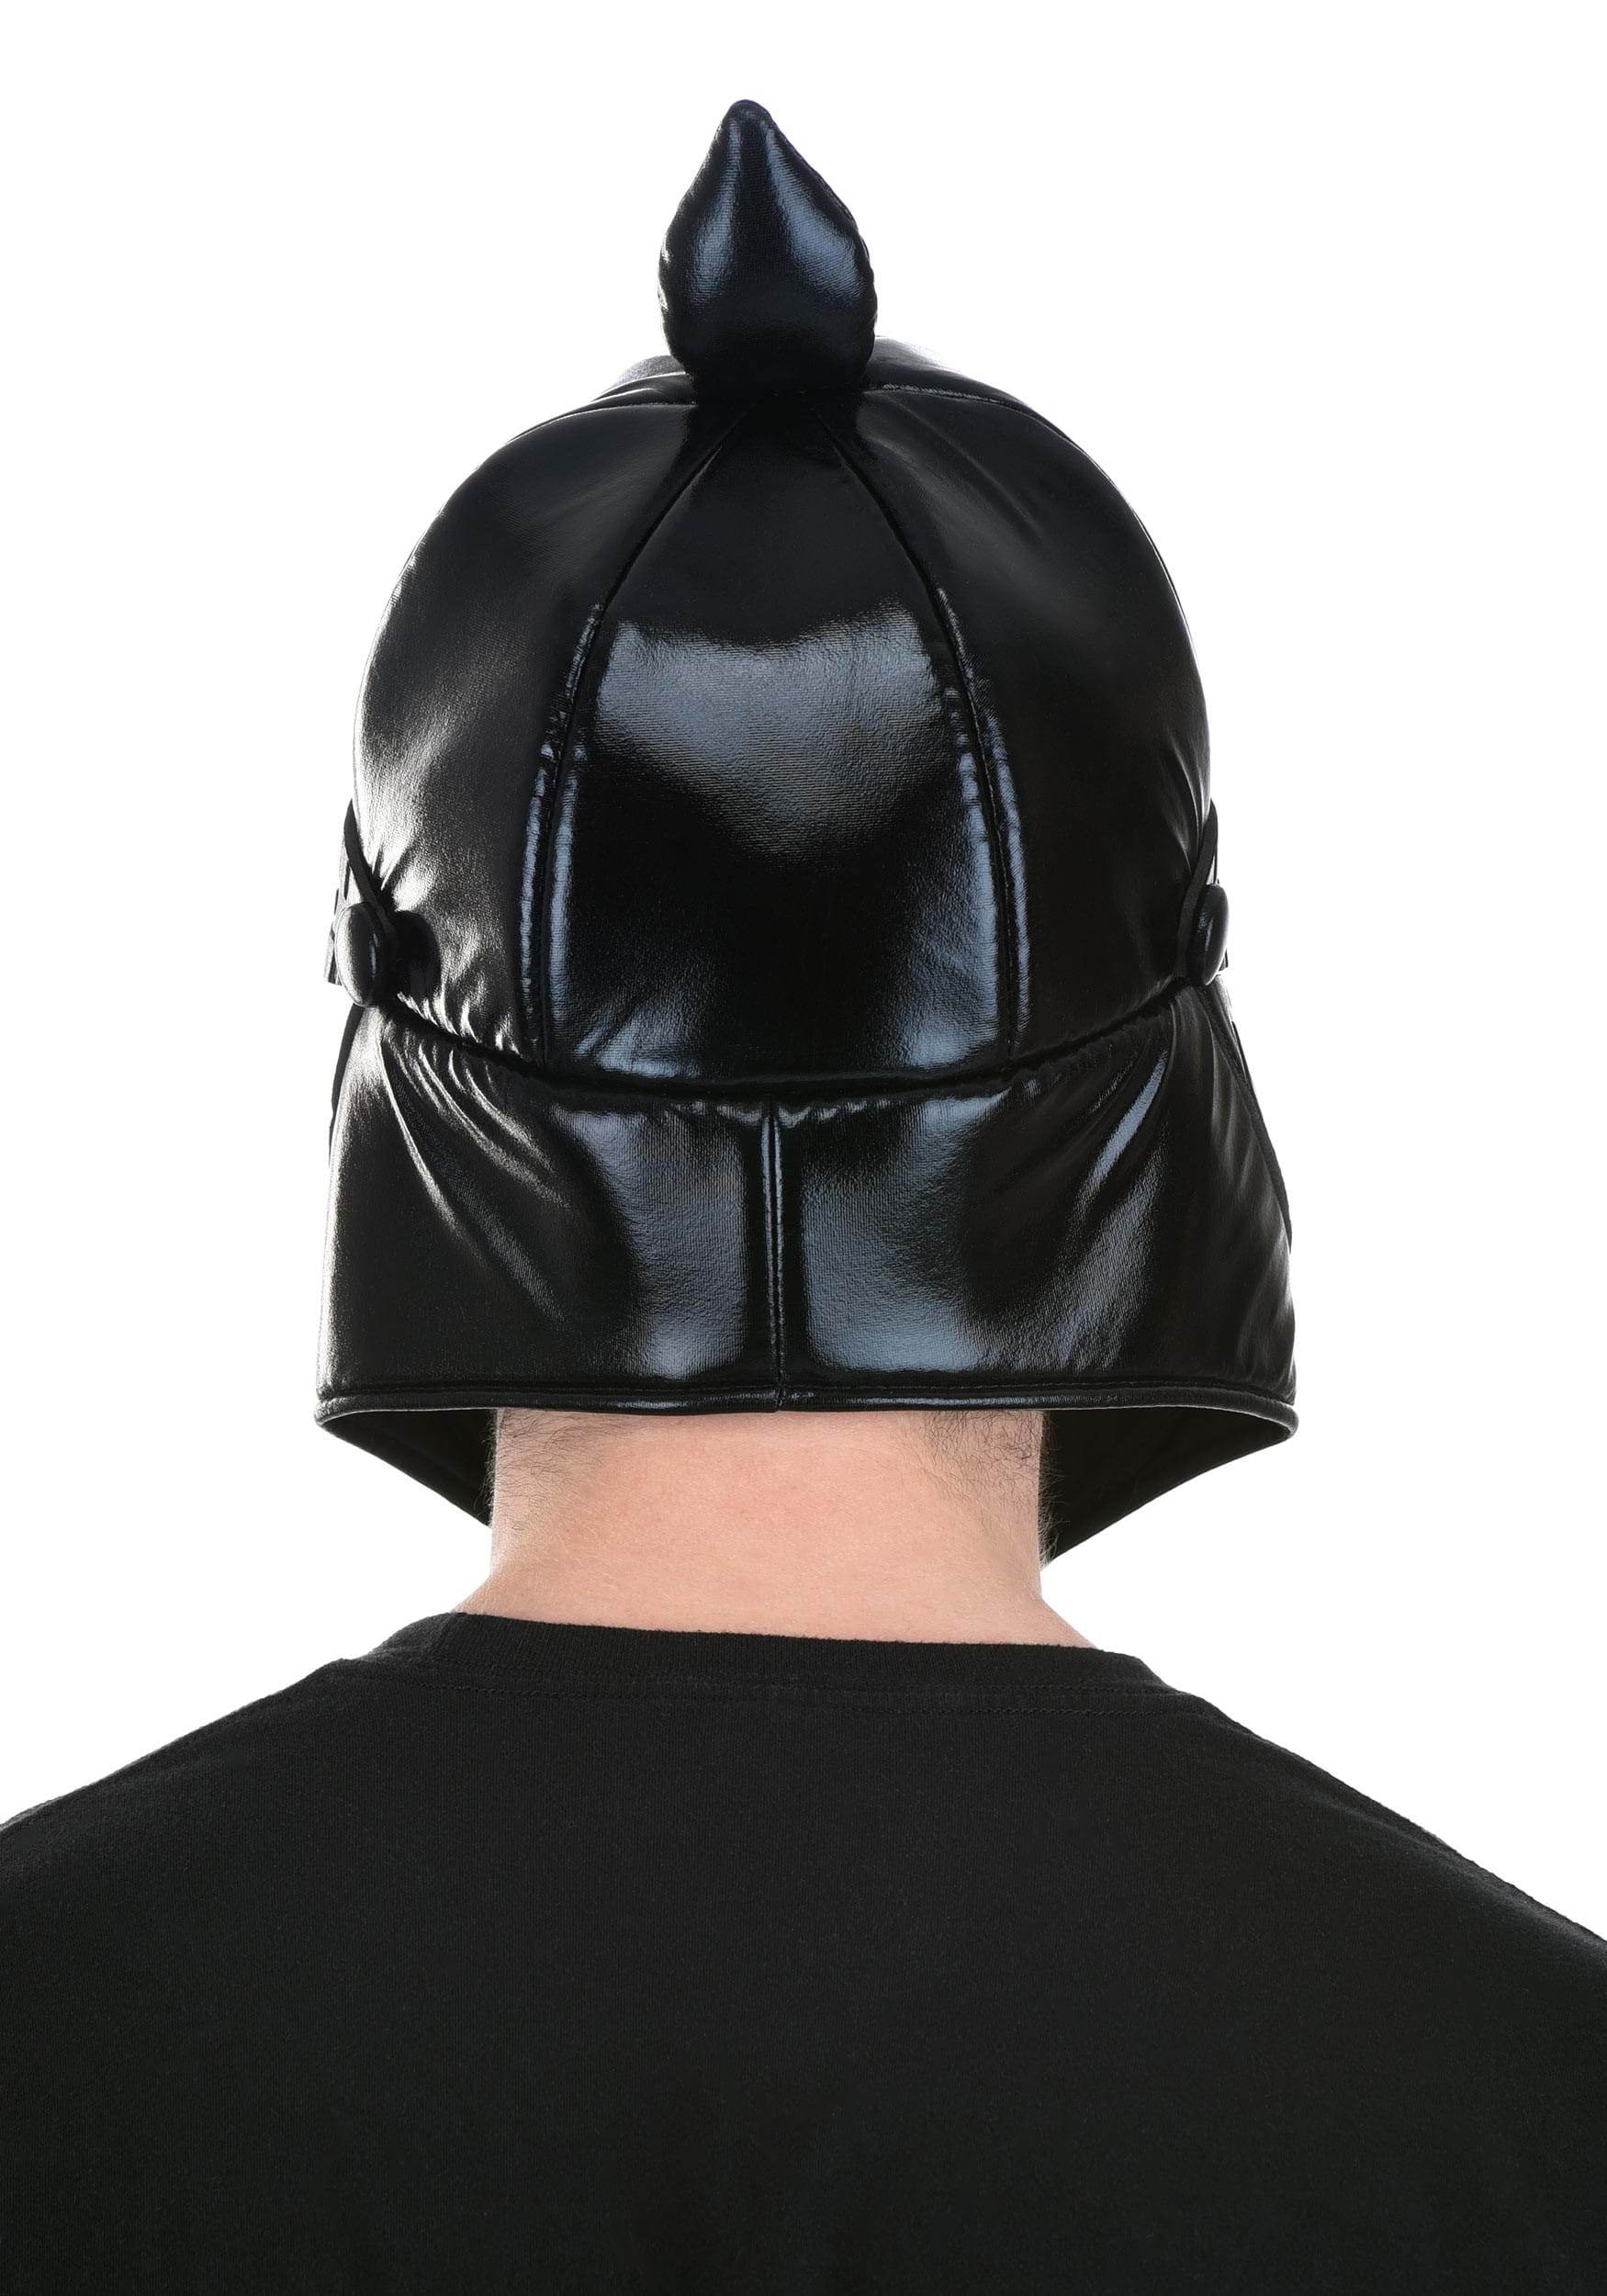 Foam Black Knight Fancy Dress Costume Helmet , Medieval Accessories